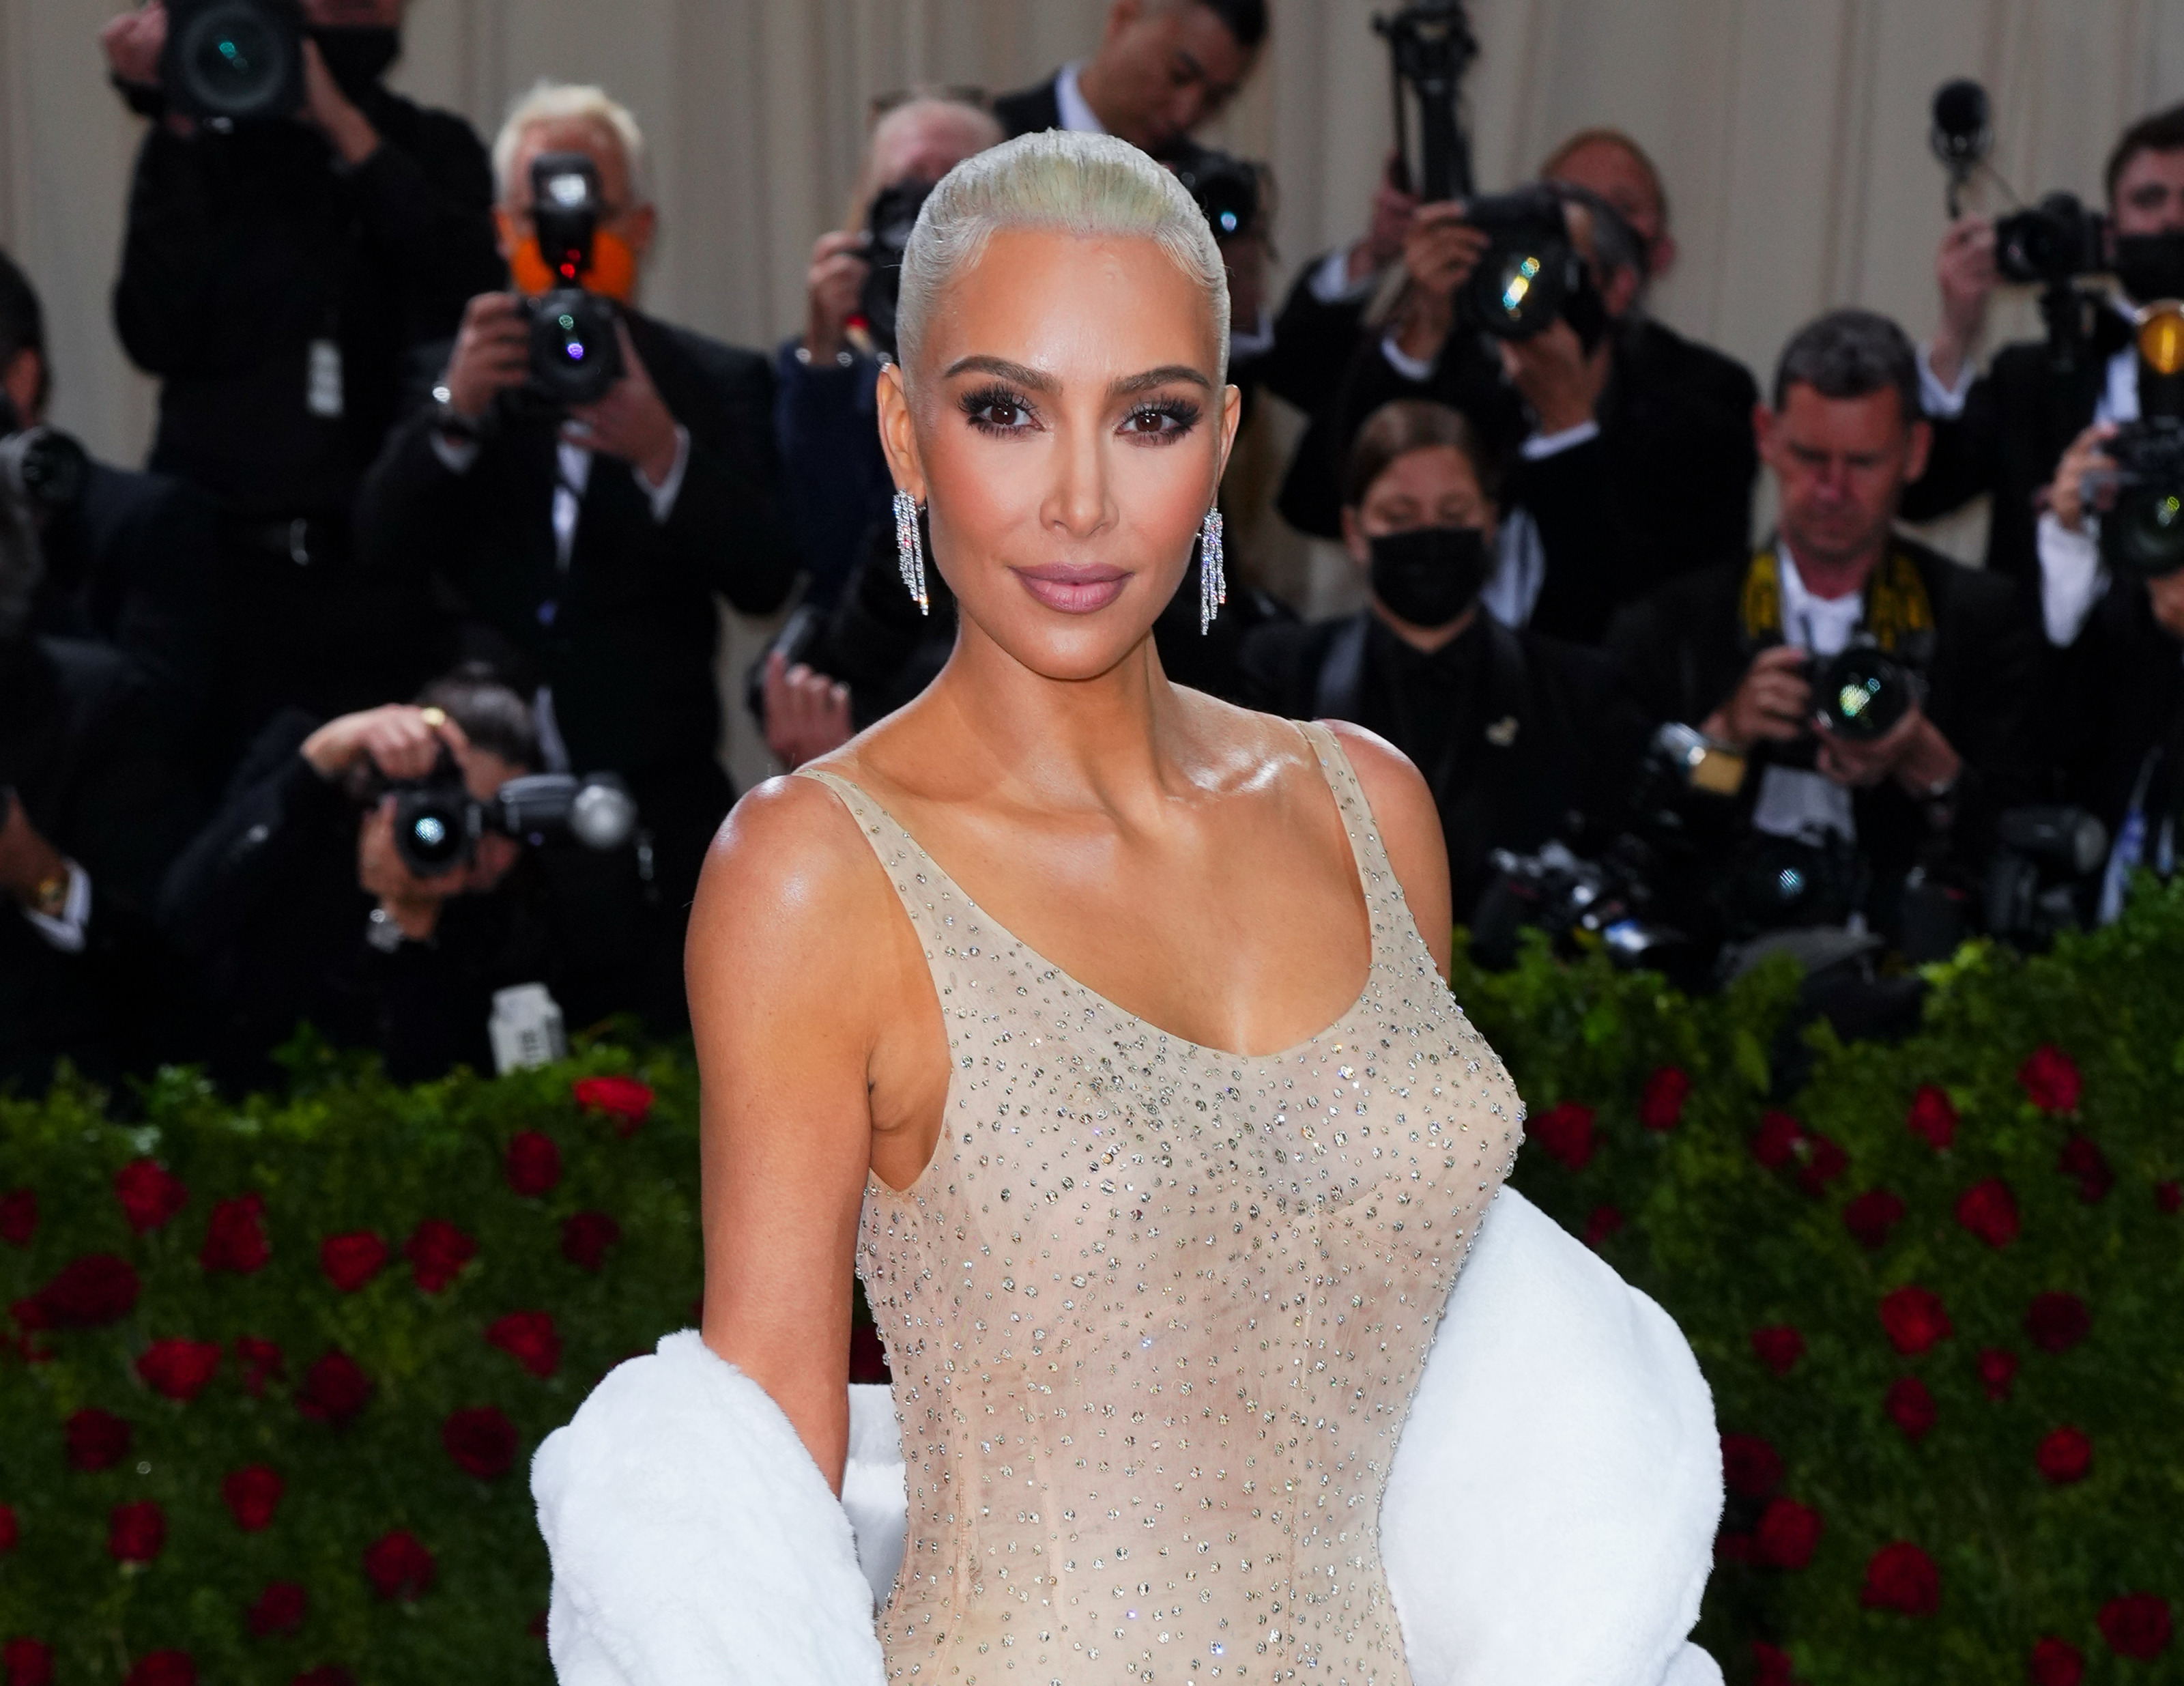 History behind Kim Kardashian's Met Gala 2022 look